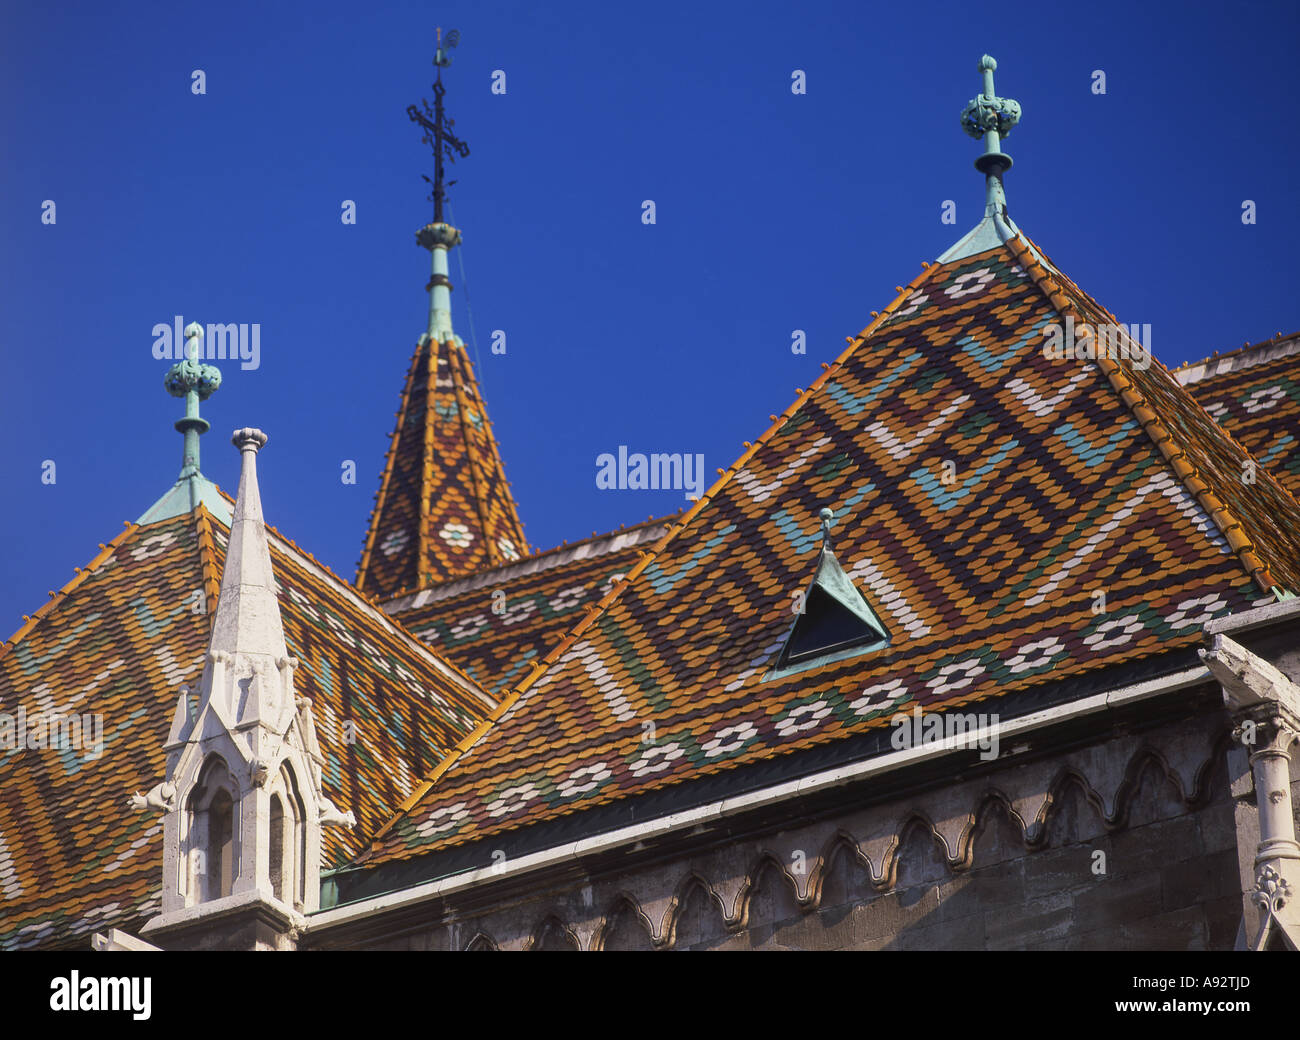 Tiled roof of Matyas templom church Buda Budapest Hungary Stock Photo